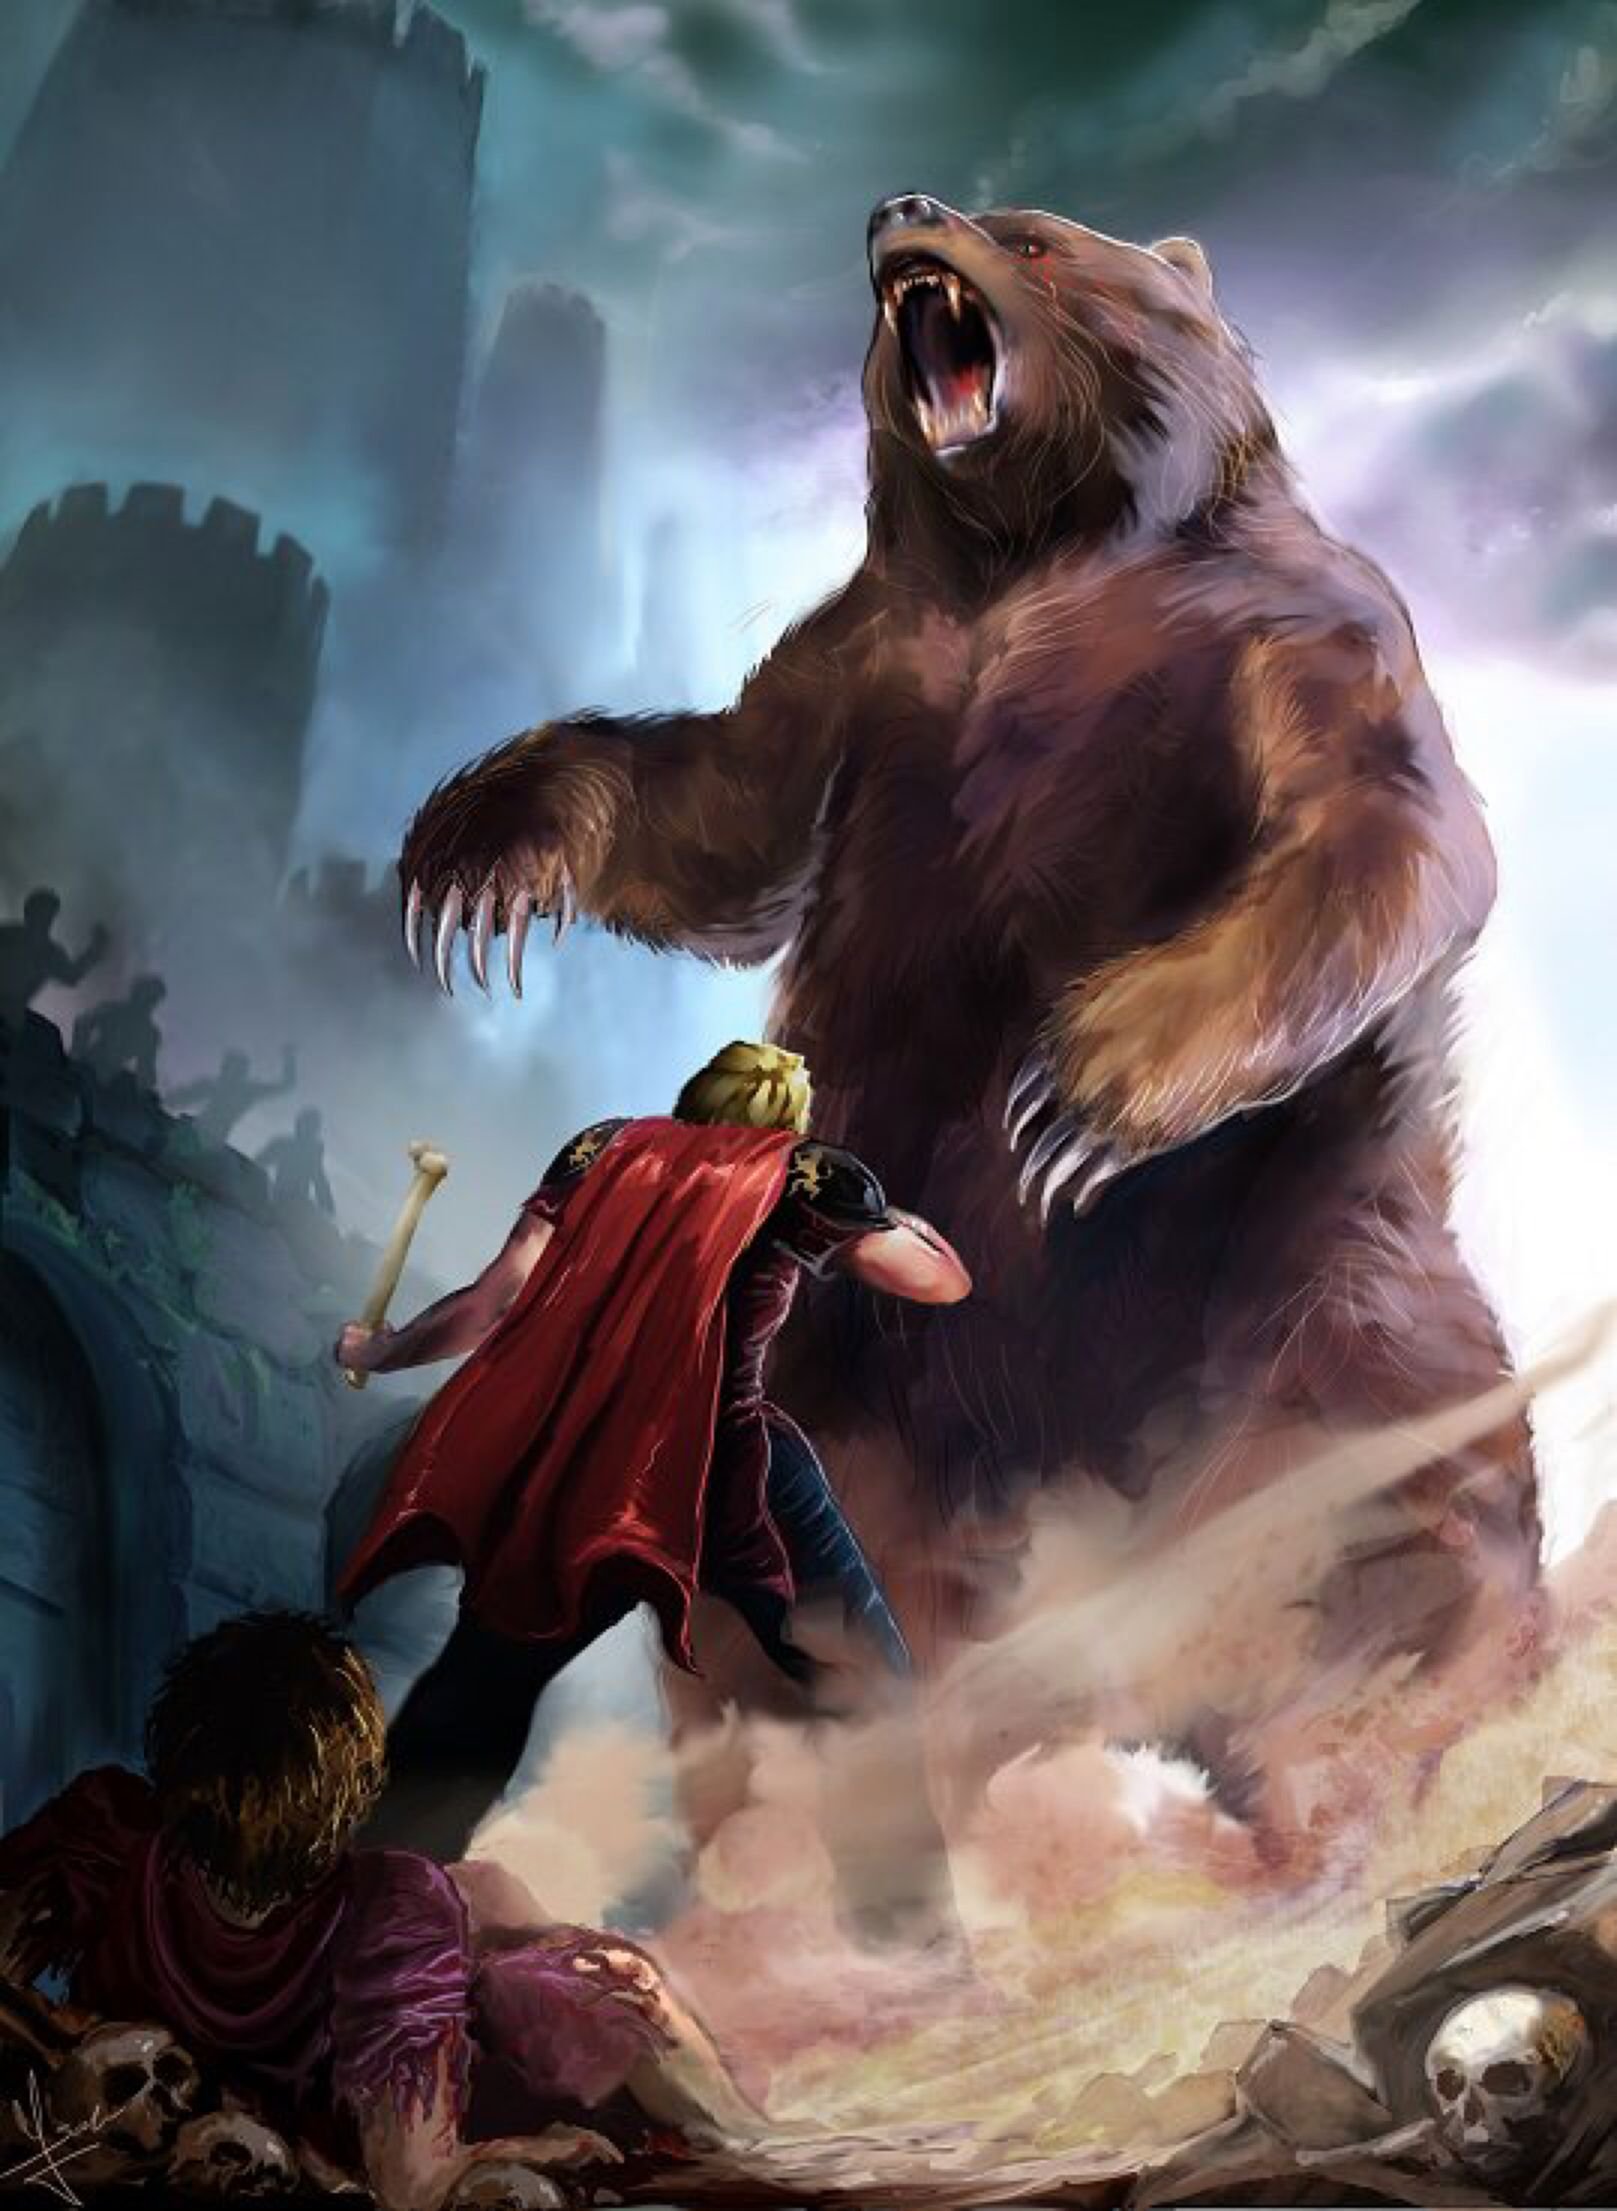 Схватка с медведем. Джейме Ланнистер с медведем. Гвинт Разъяренный медведь. Медведь фэнтези.